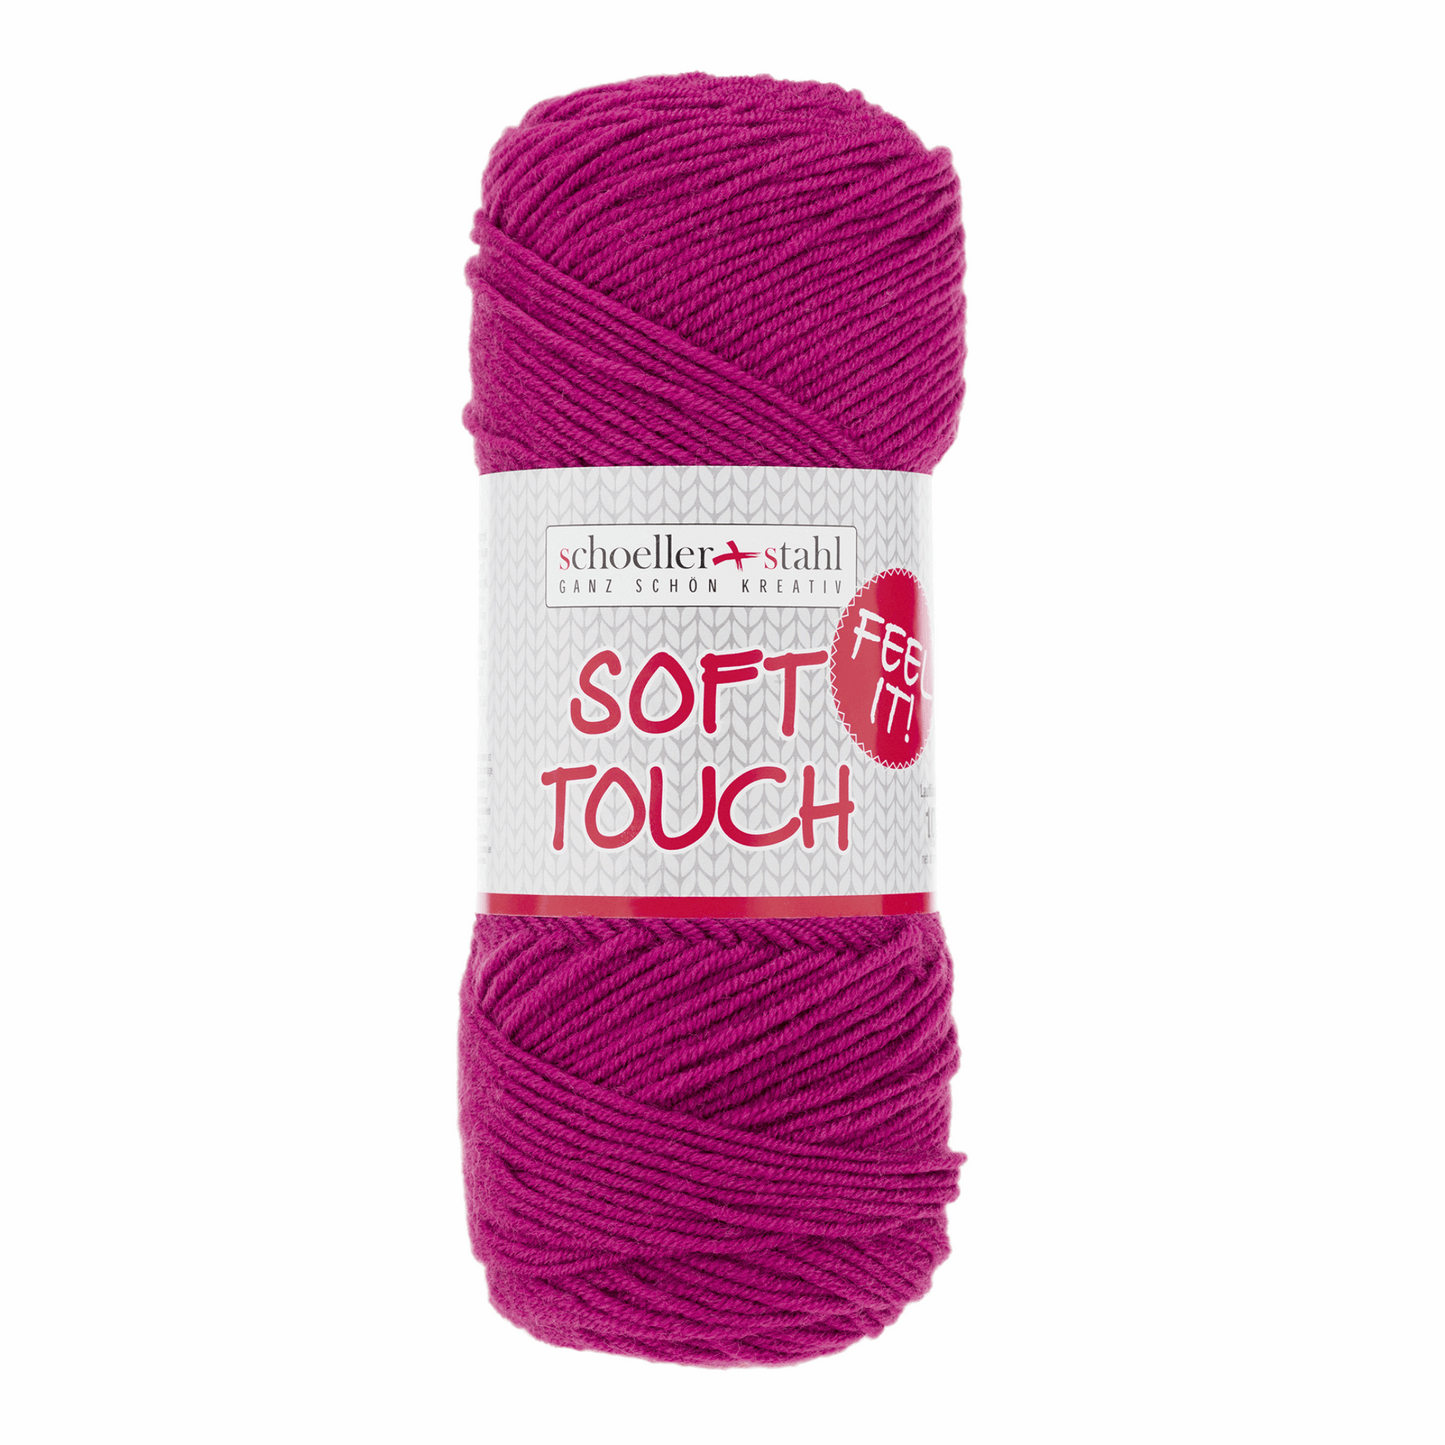 Soft touch 100g pullskin, 90283, Farbe 7, fuchsia